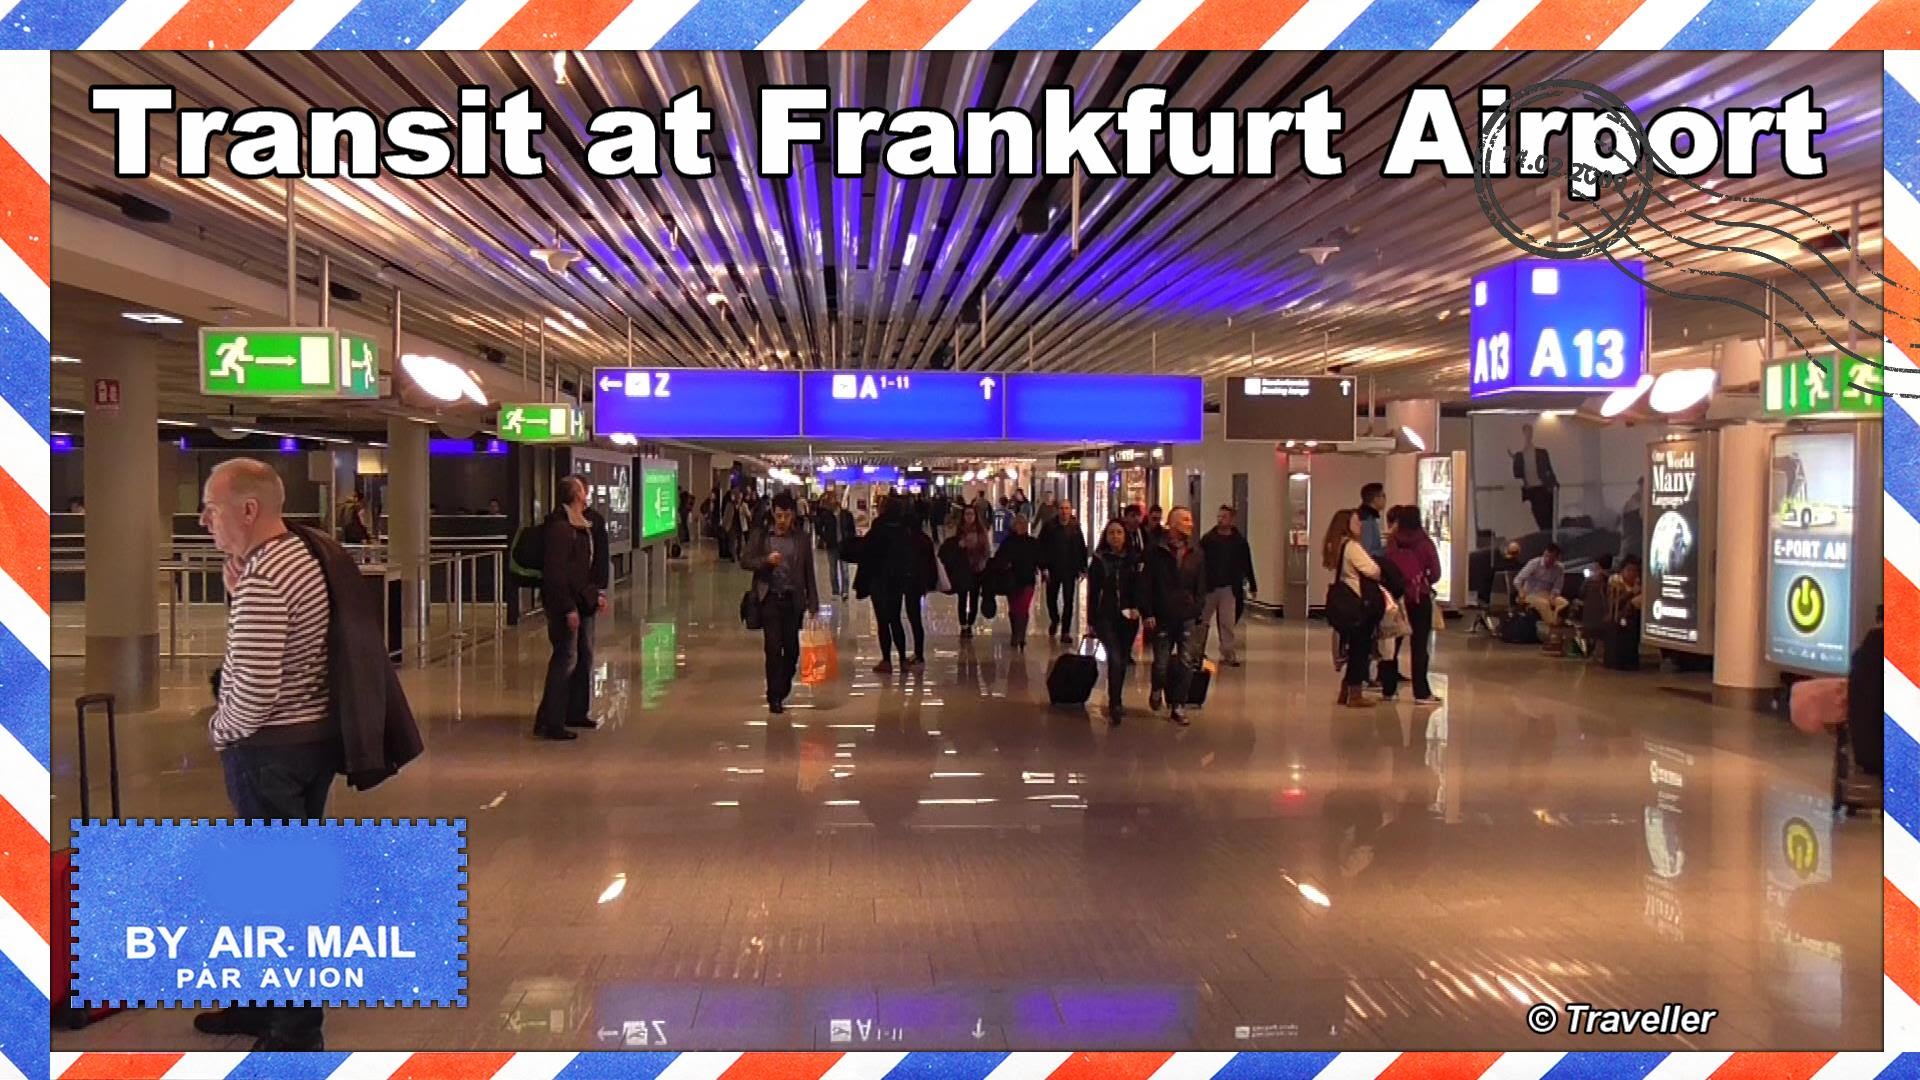 Transit walk at Frankfurt Airport, FRA Terminal 1 – Connection flight transfer, arriving & departing